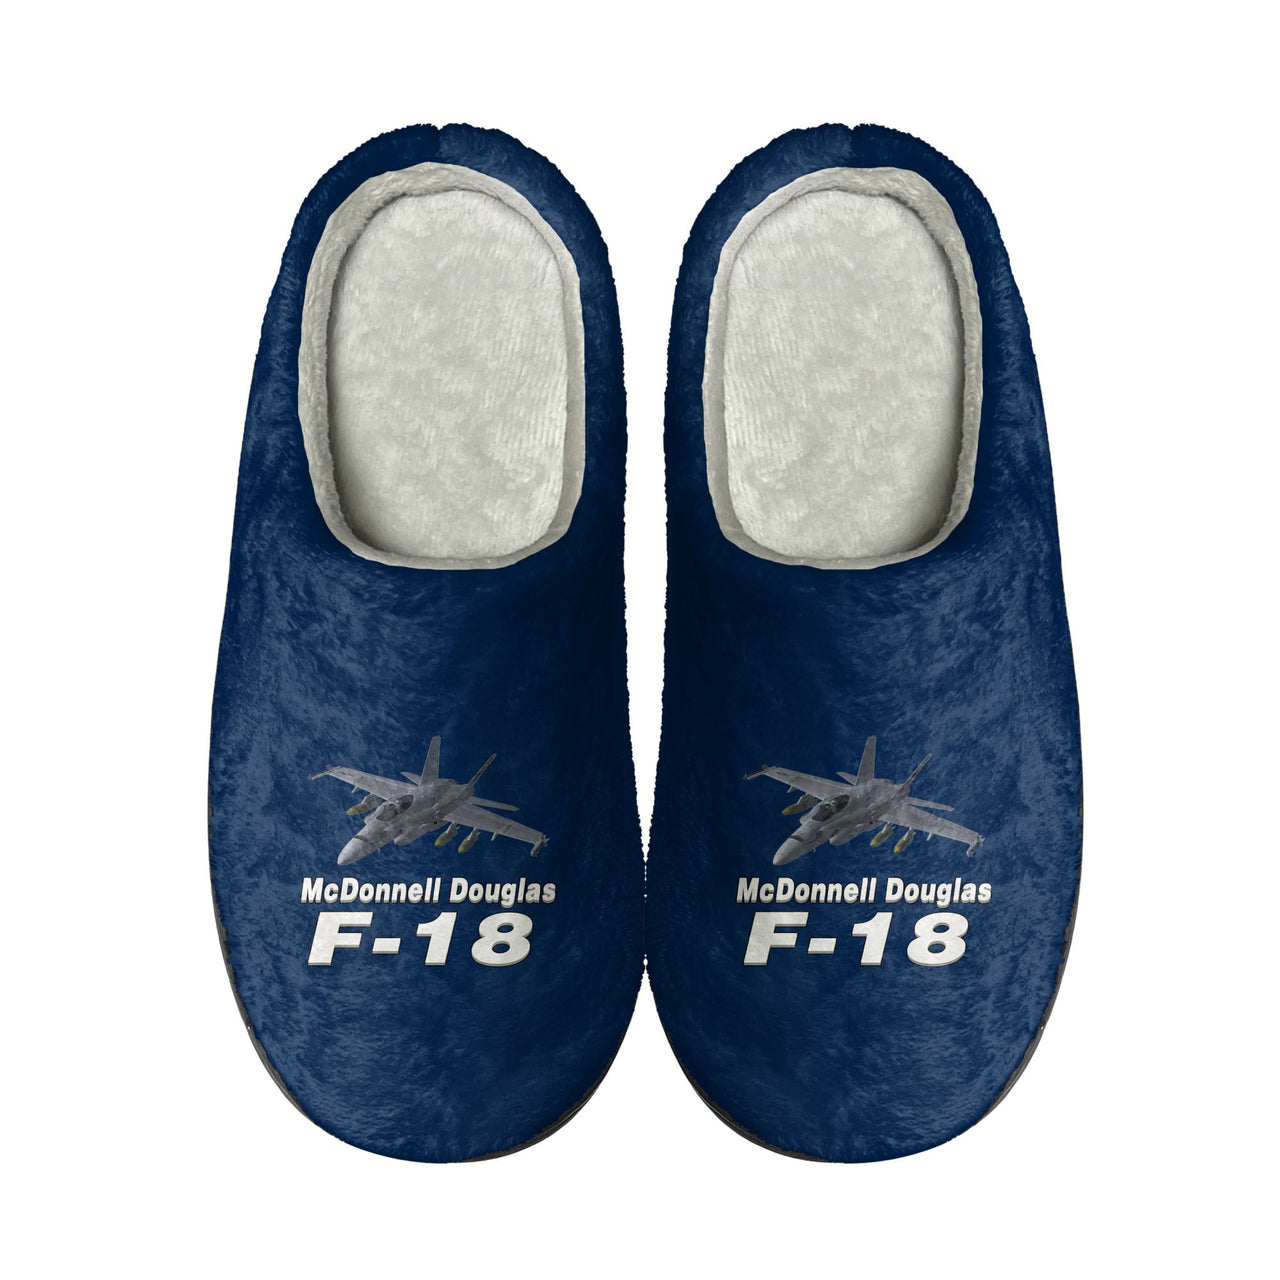 The McDonnell Douglas F18 Designed Cotton Slippers